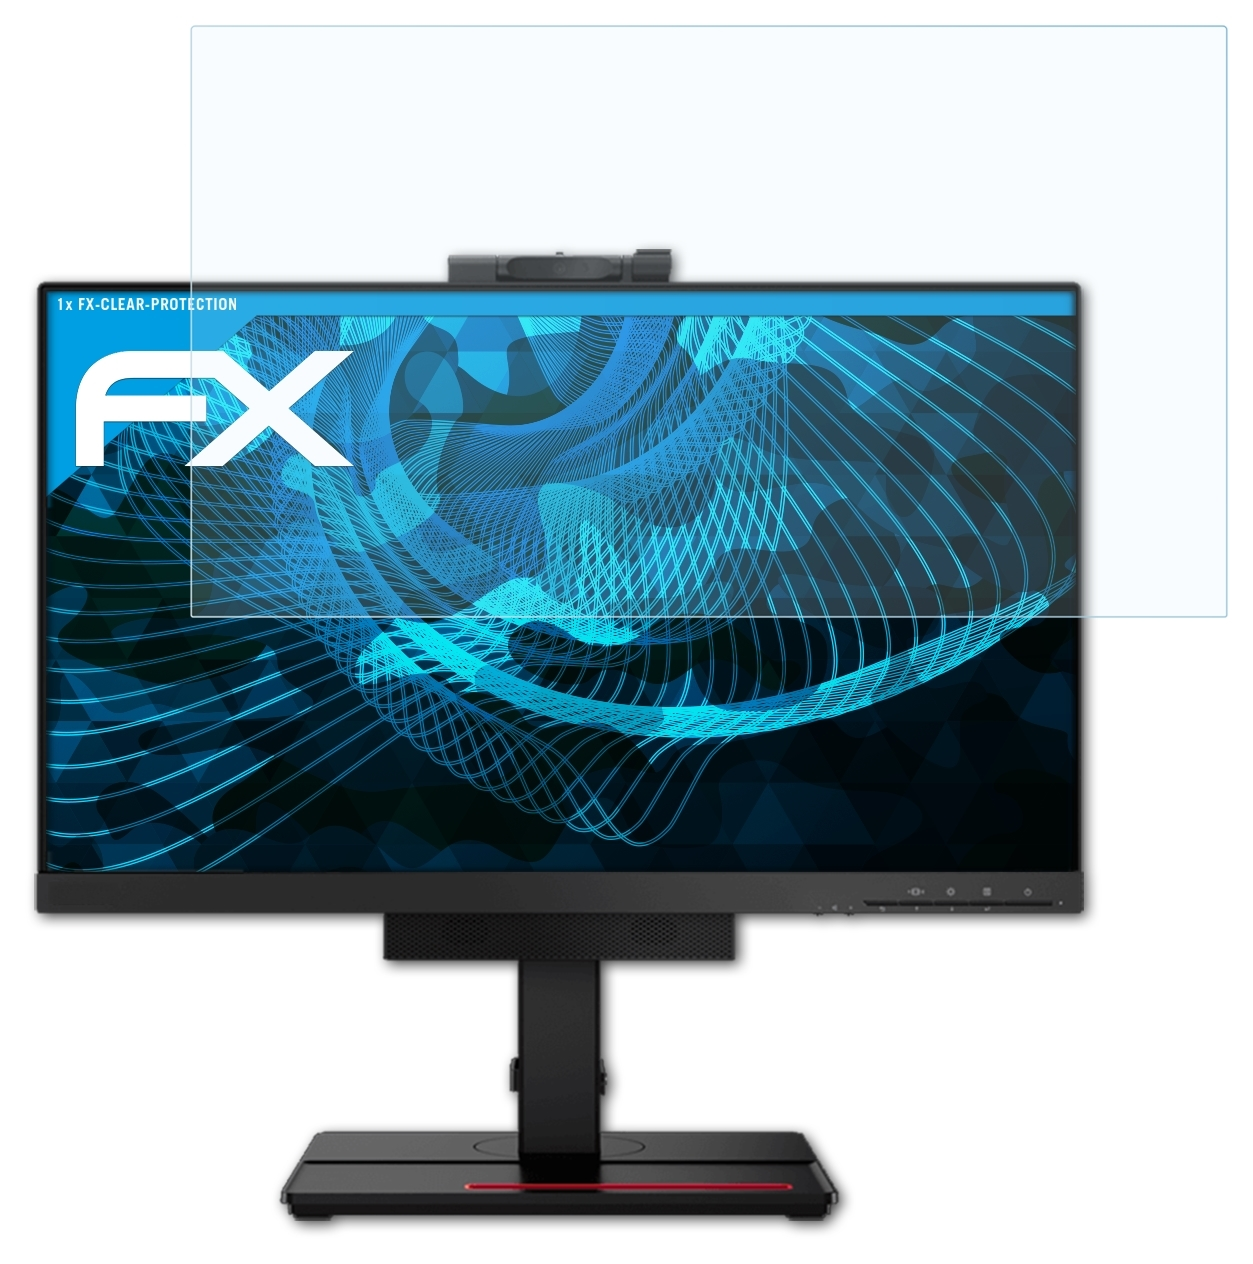 ATFOLIX FX-Clear Displayschutz(für Lenovo 11GDPAT1EU) ThinkCentre